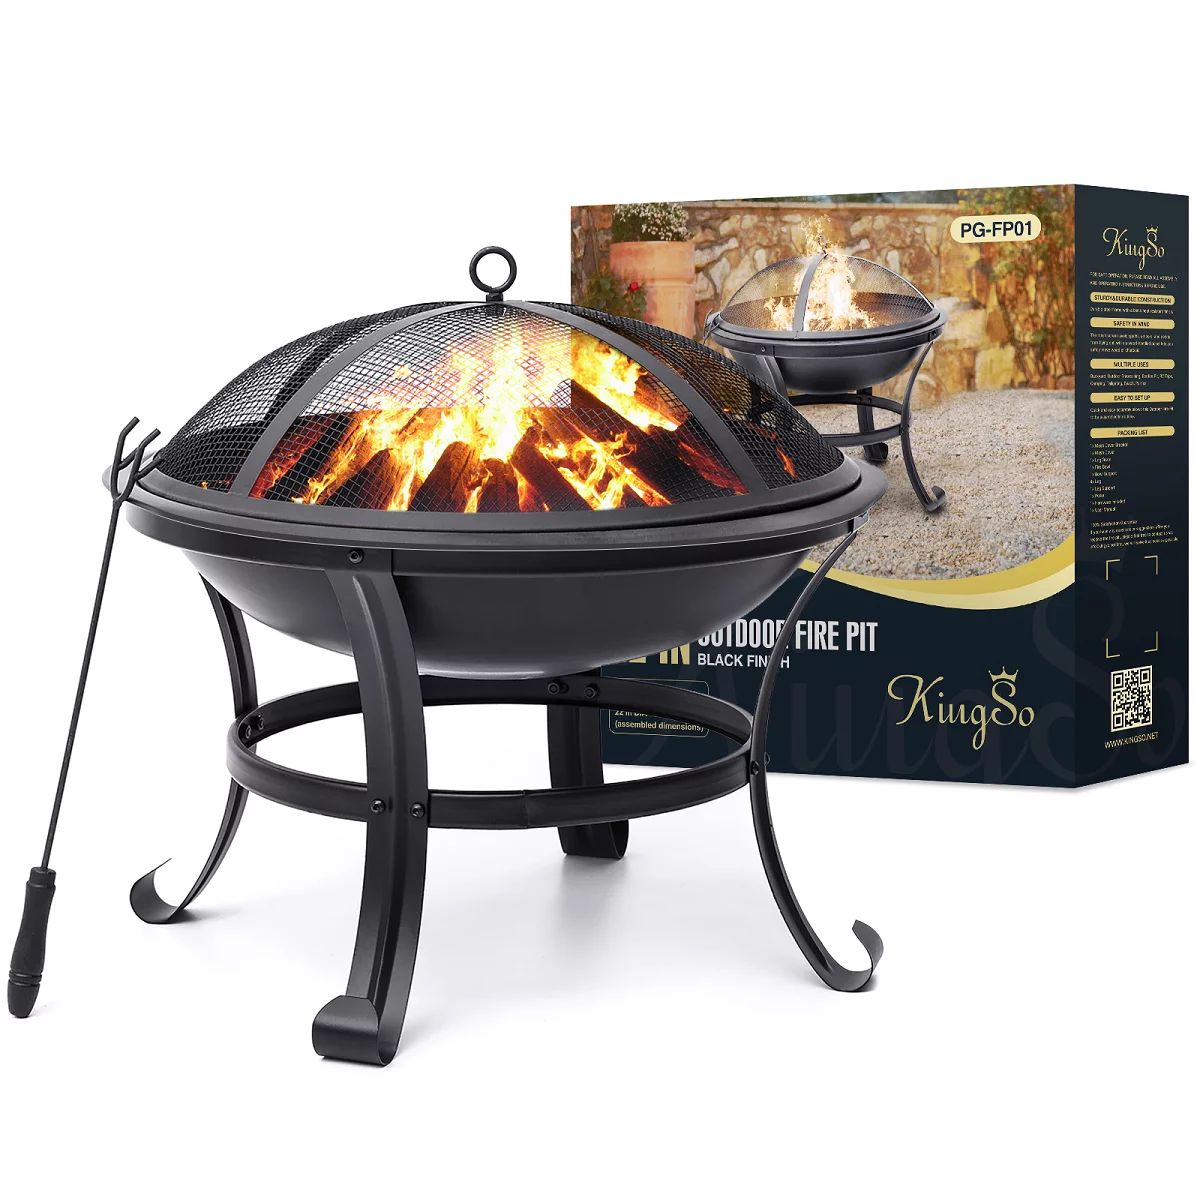 KingSo 22" Wood Burning Fire Pit for Camping Picnic Bonfire Patio Outside Backyard Garden, Round ... | Walmart (US)